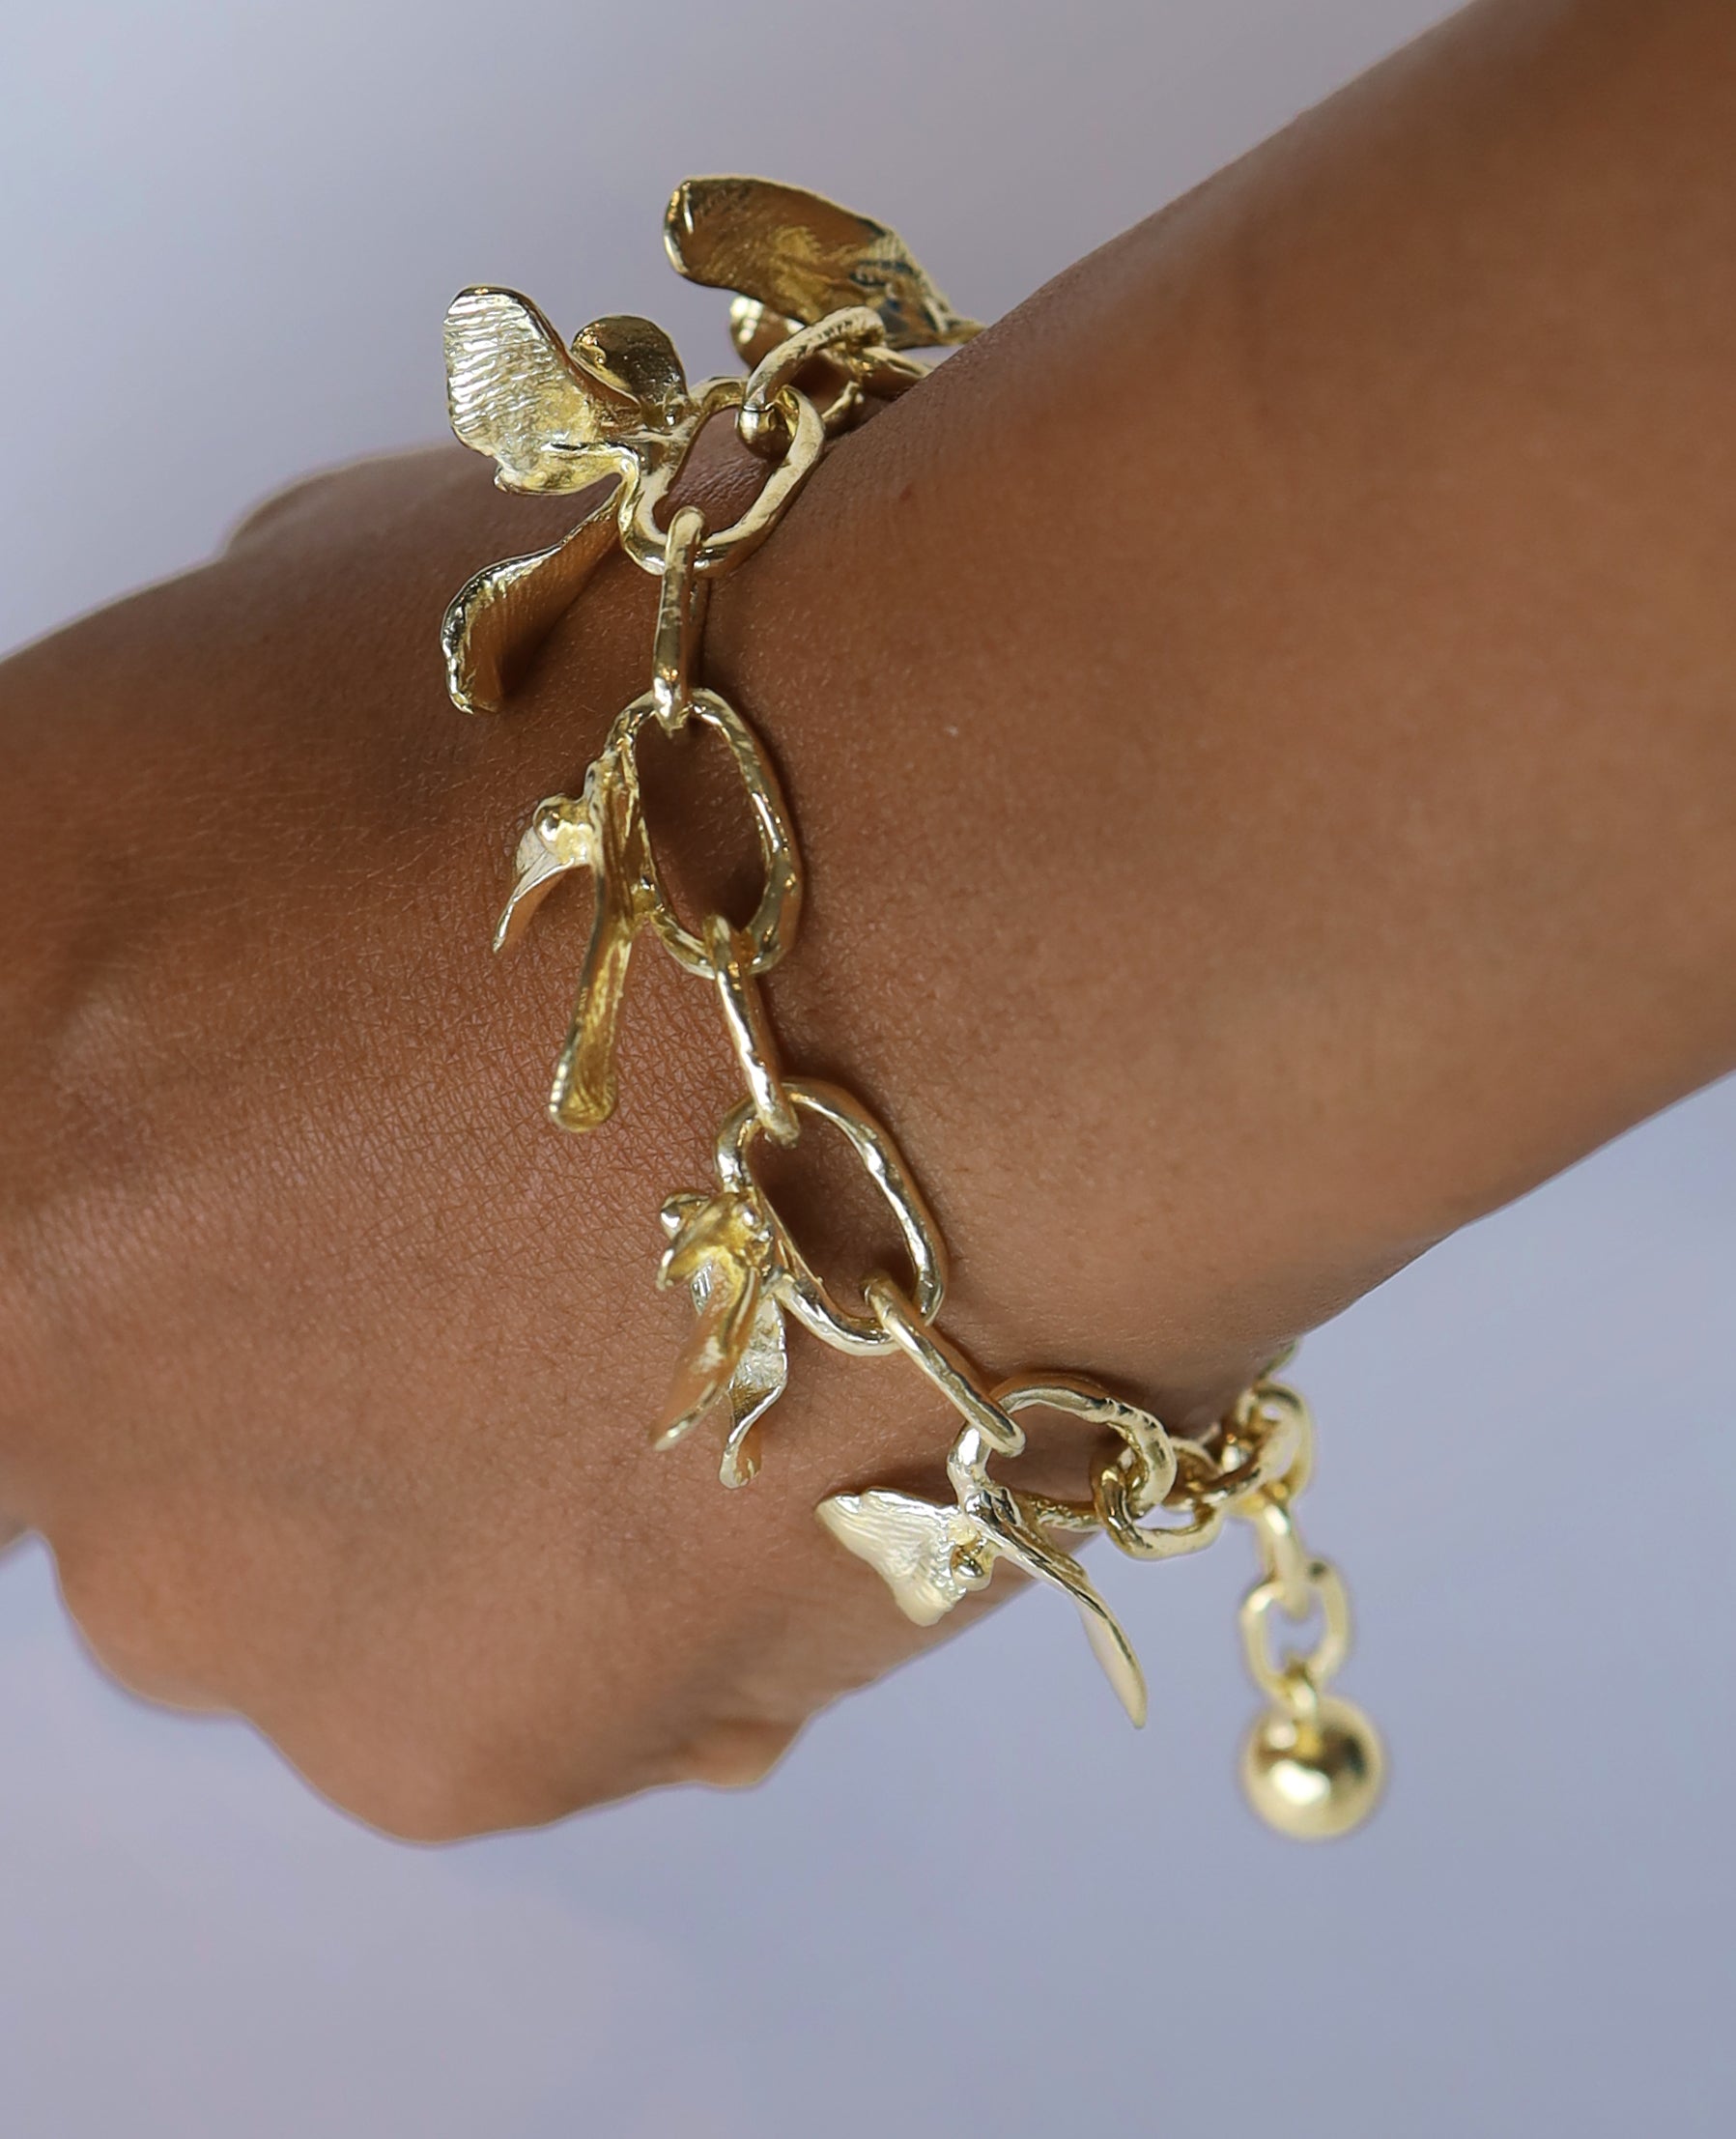 FLORALIS ARMLET // golden bracelet - ORA-C jewelry - handmade jewelry by Montreal based independent designer Caroline Pham